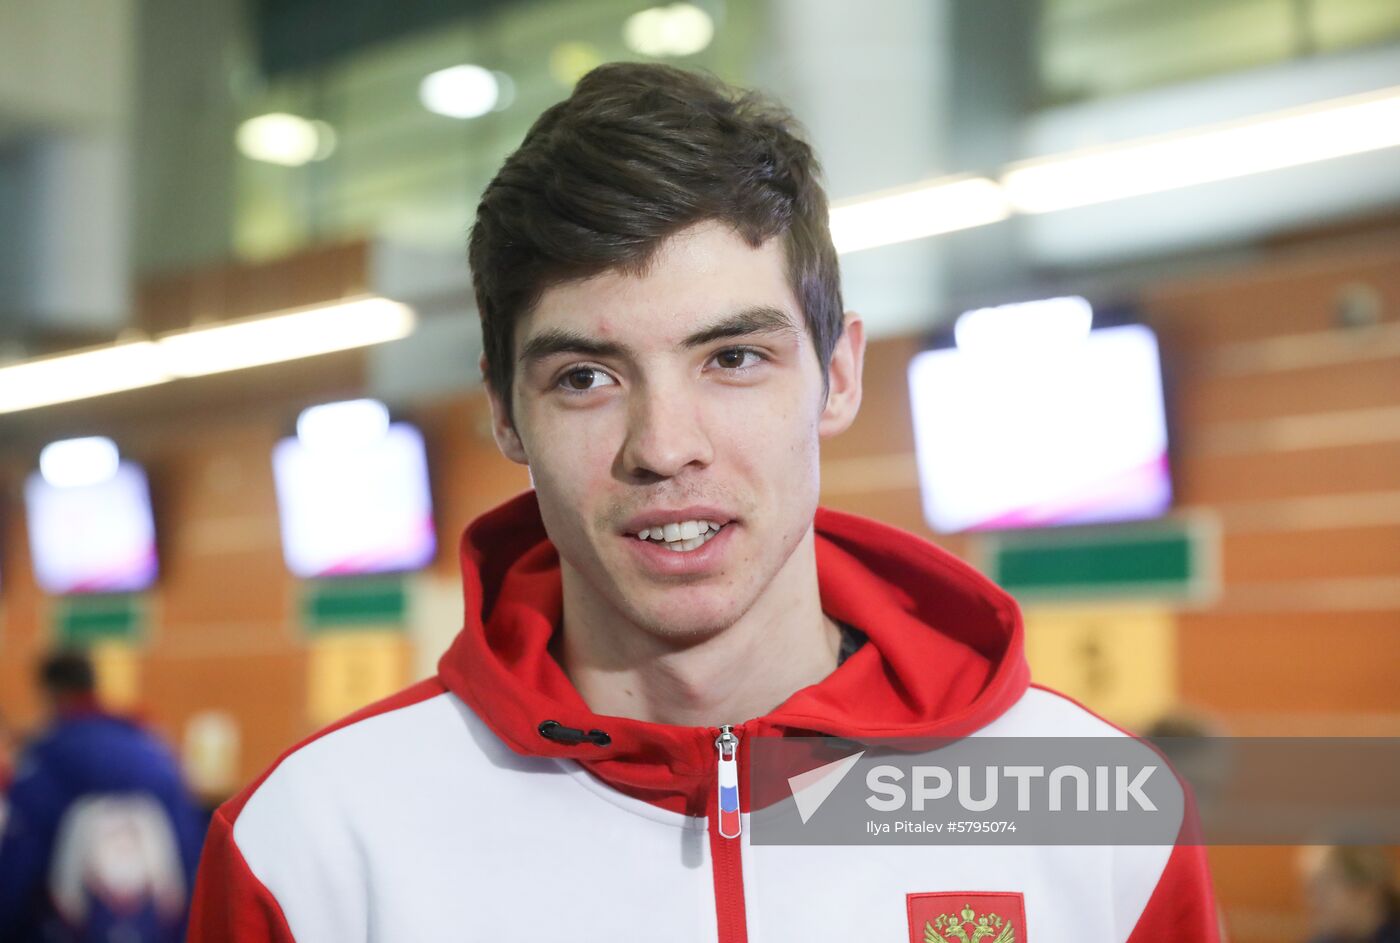 Russia Universiade National Team Departure